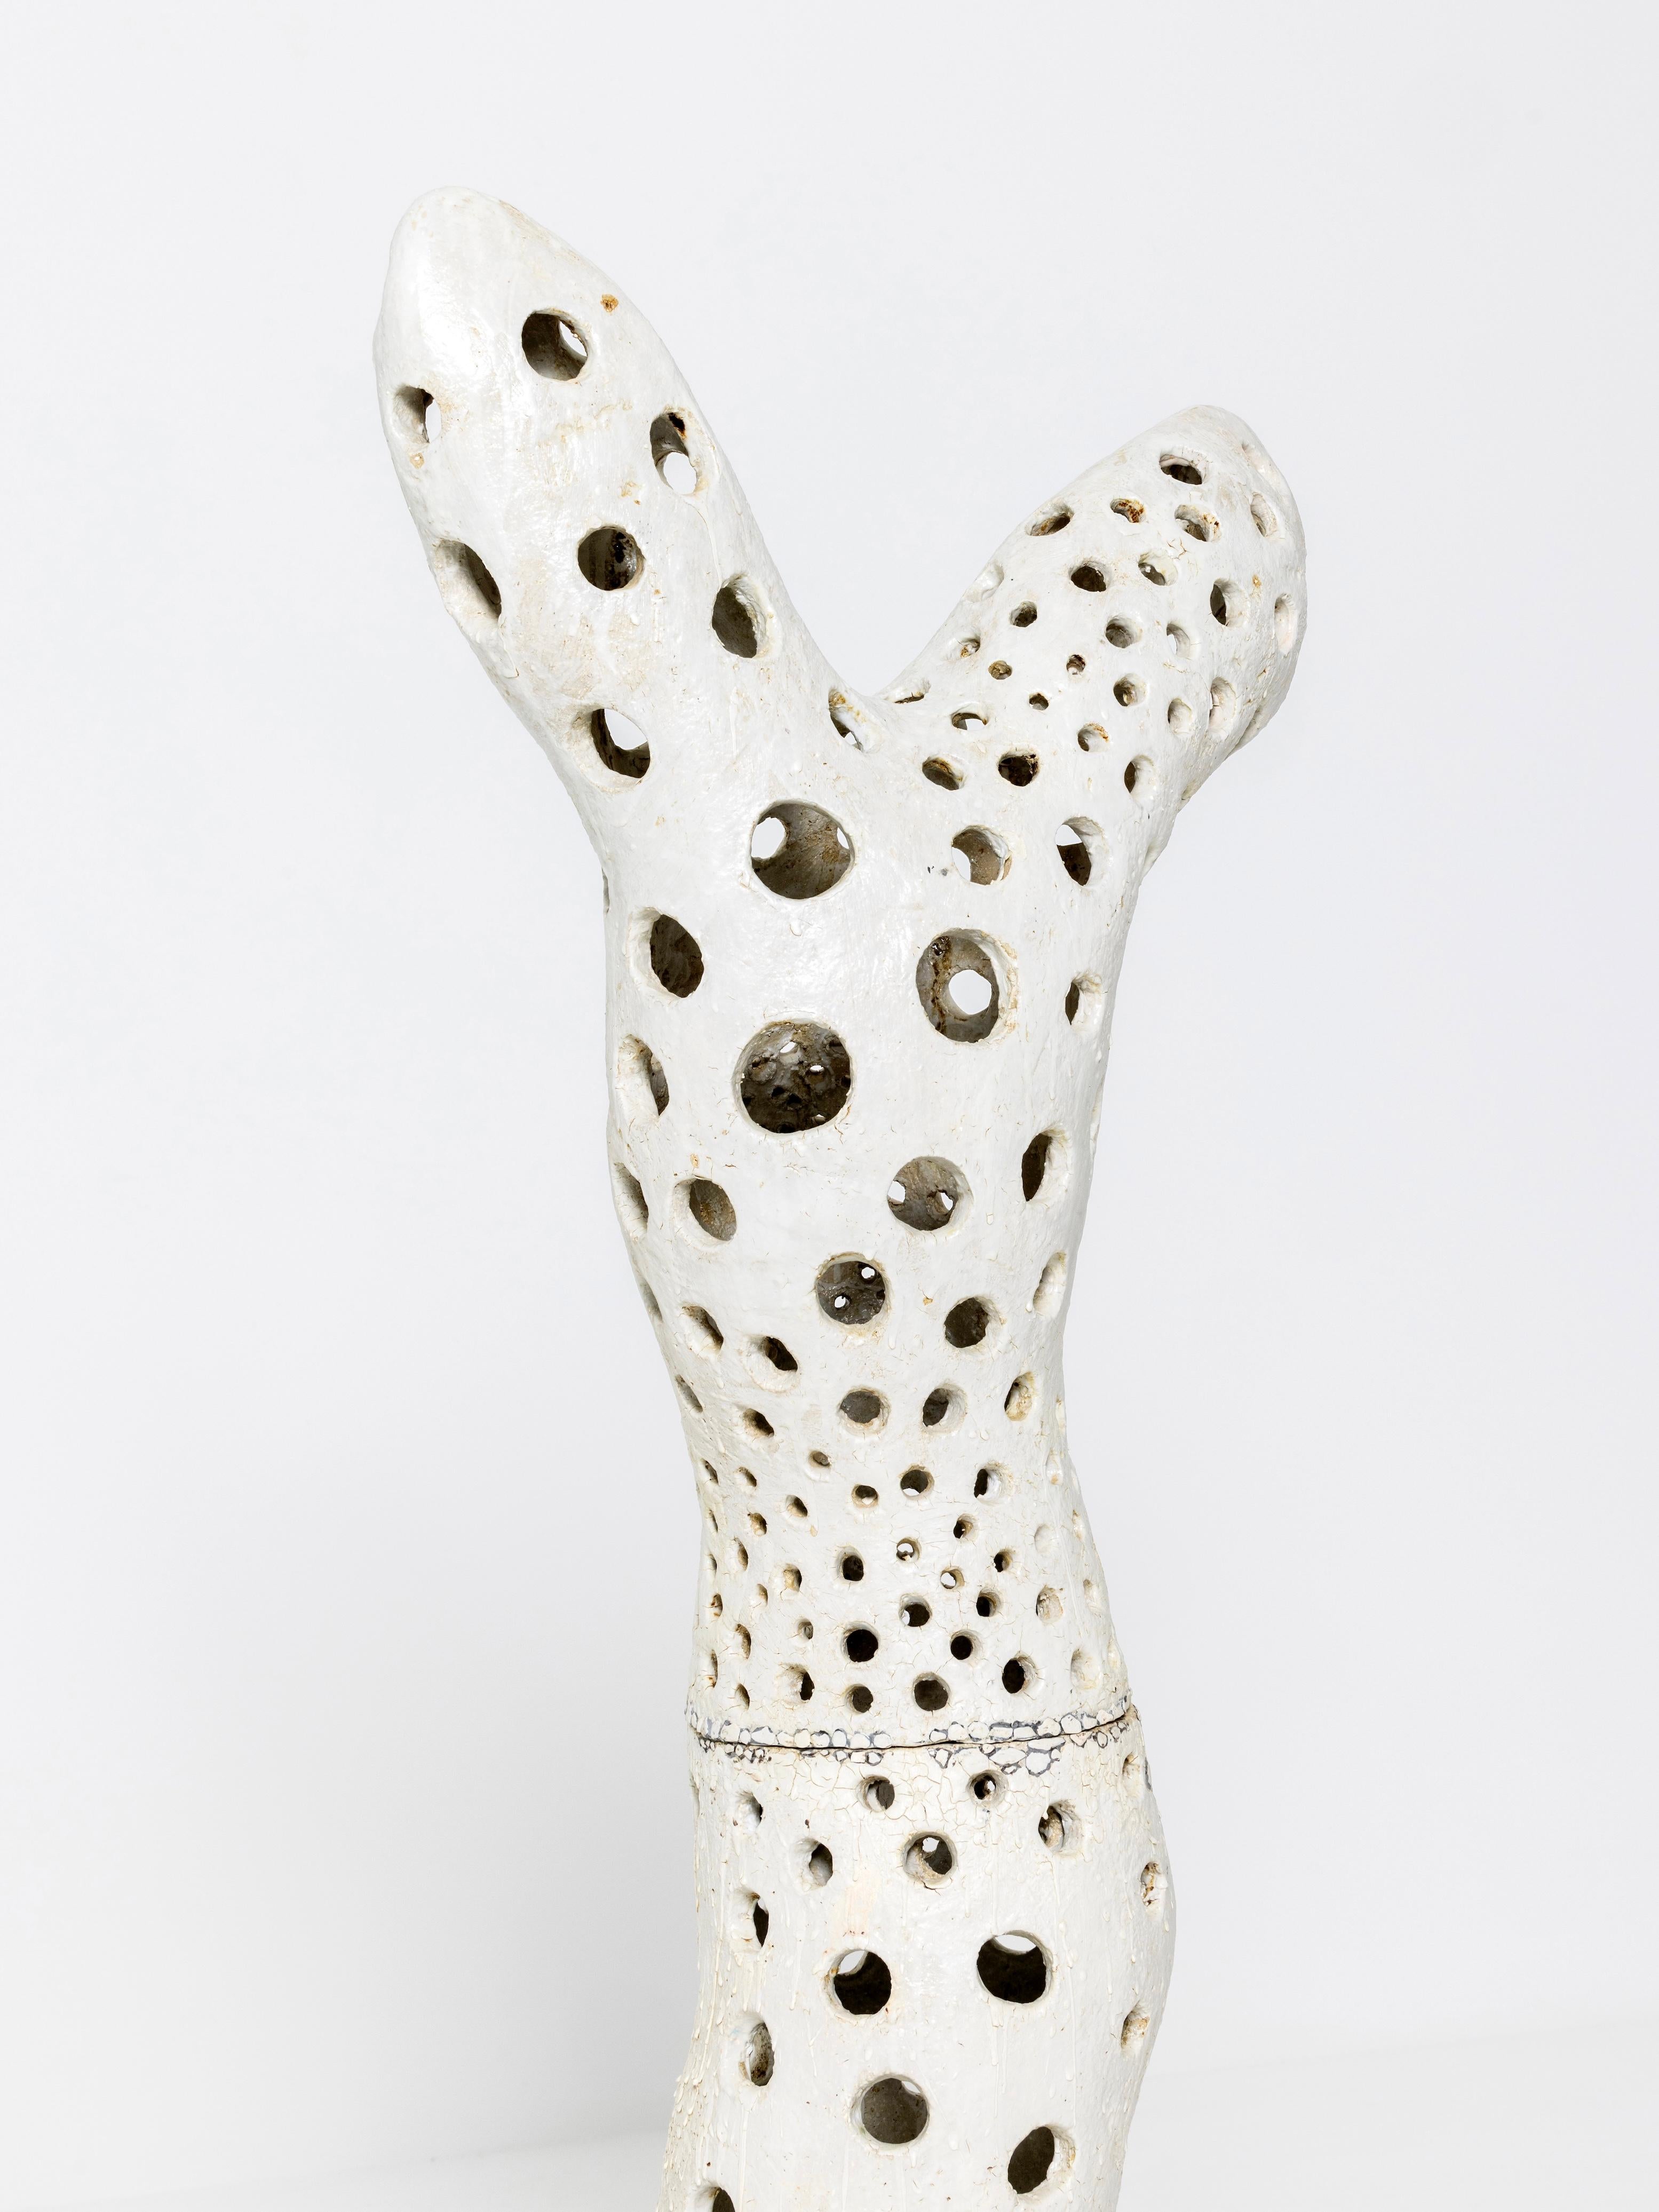 Hand-Crafted Contemporary Ceramic Sculpture 